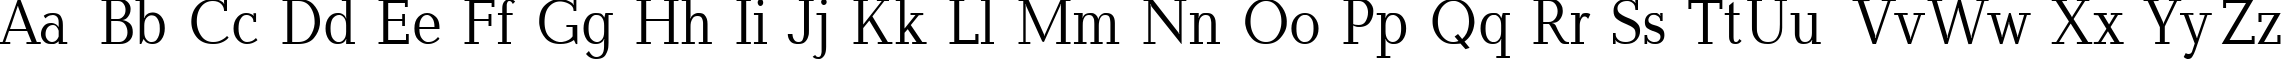 Пример написания английского алфавита шрифтом Baltica_85n